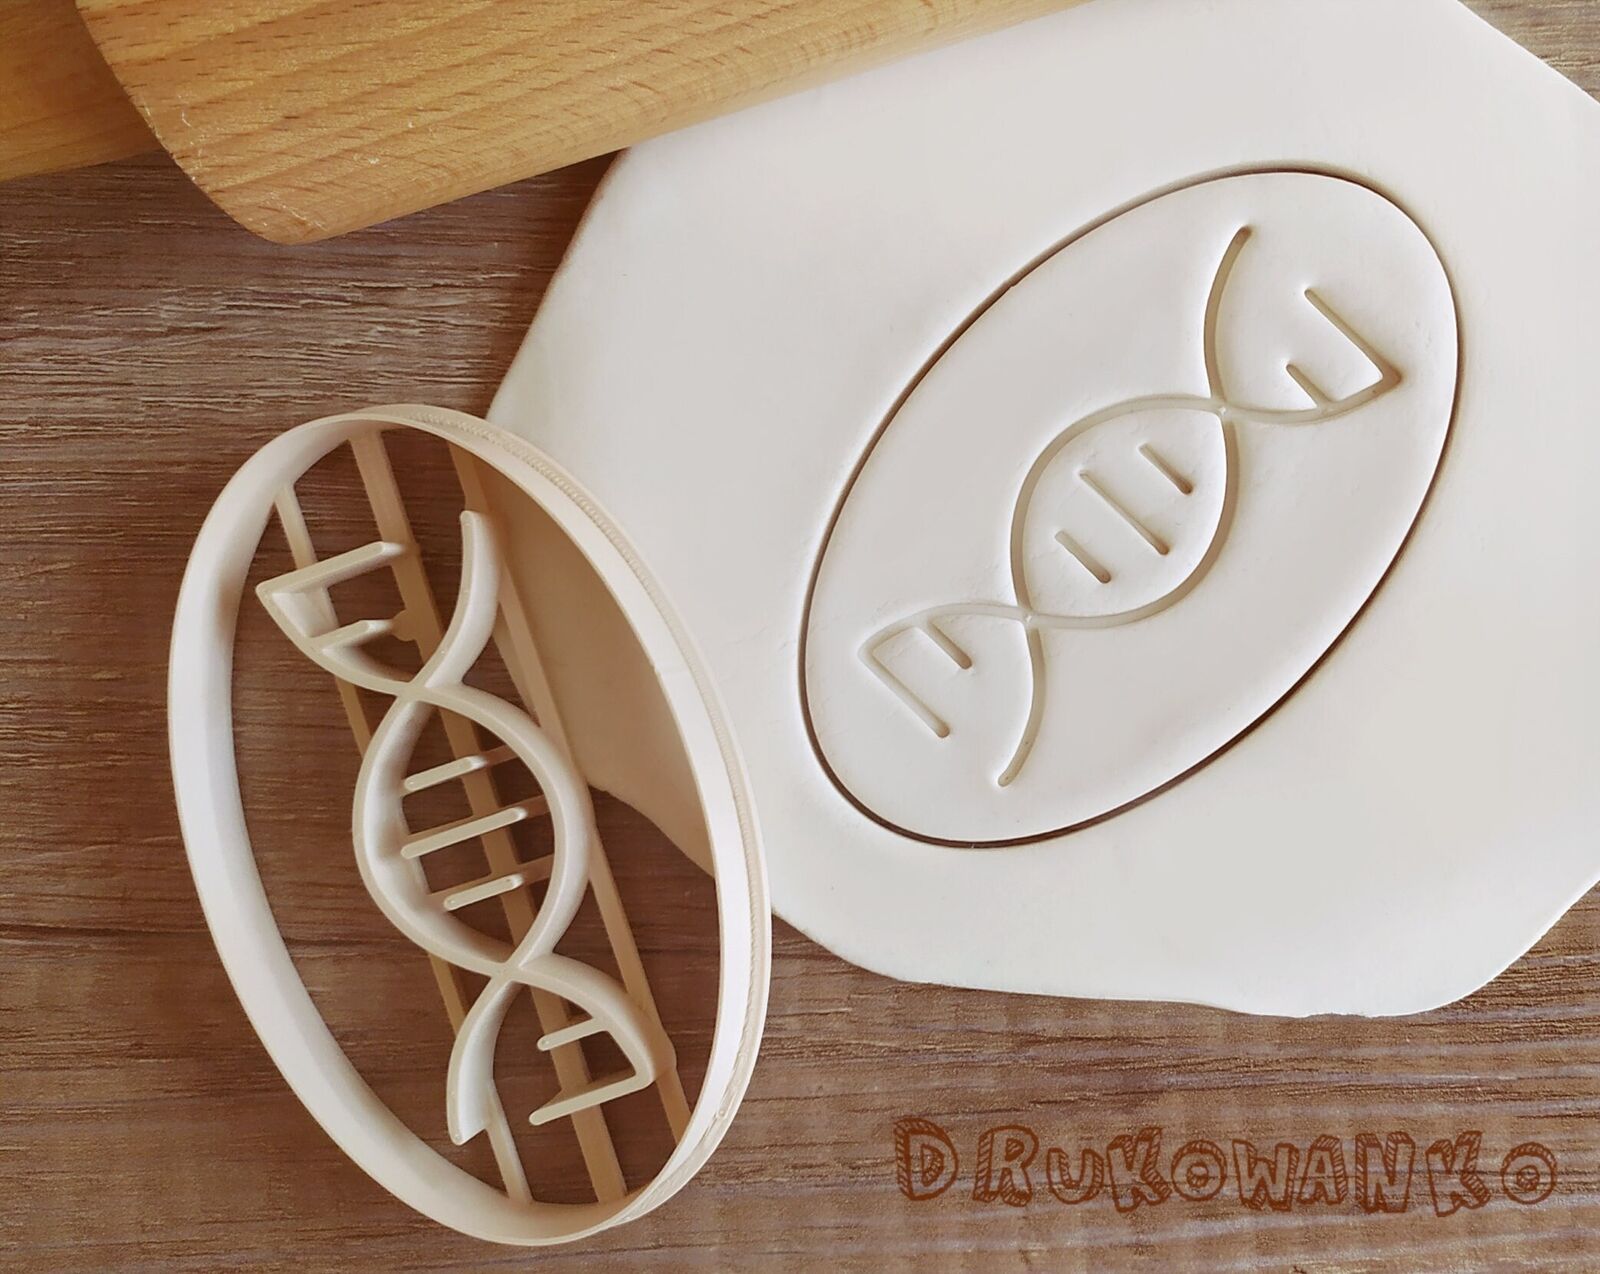 DNA RNA Biology Medicine Body Cookie Cutter Pastry Fondant Biology Human